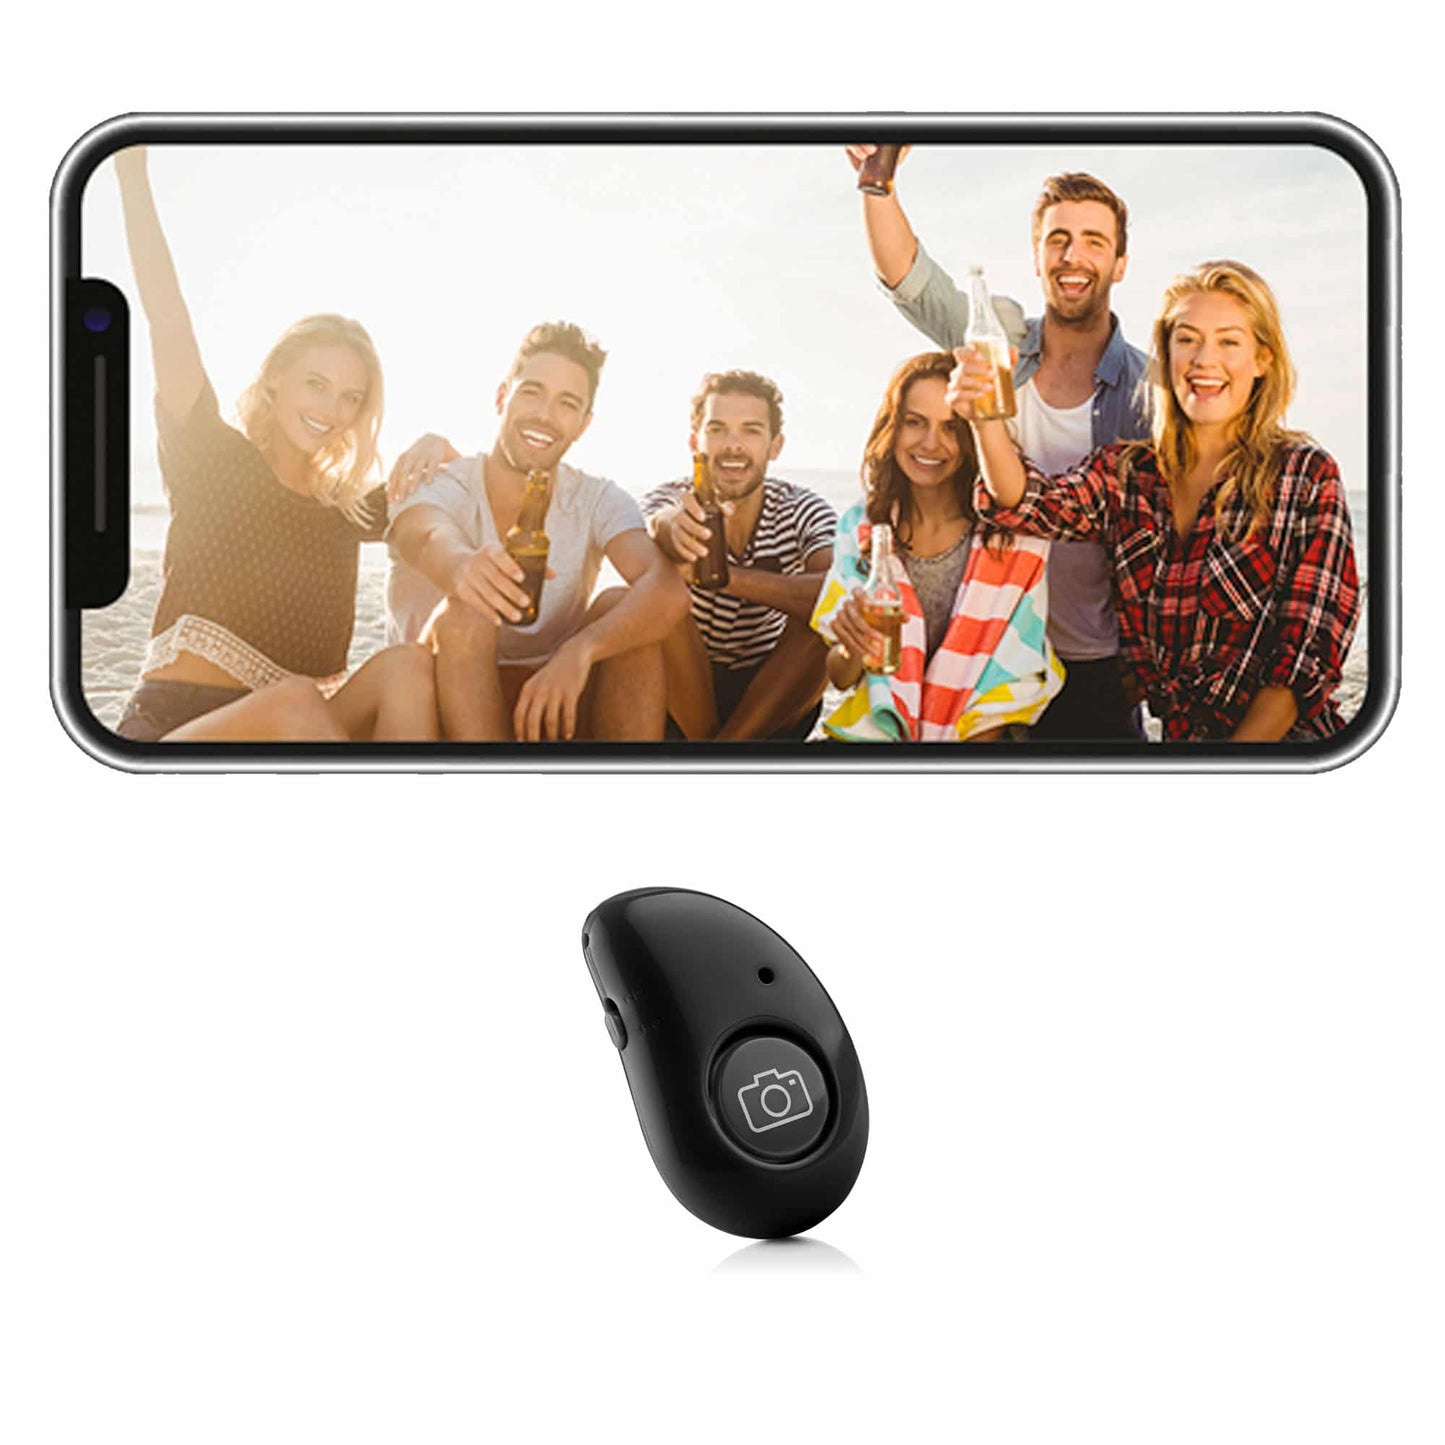 Bluetooth remote shutter afstandsbediening voor smartphone camera – verschillende kleuren - Zwart